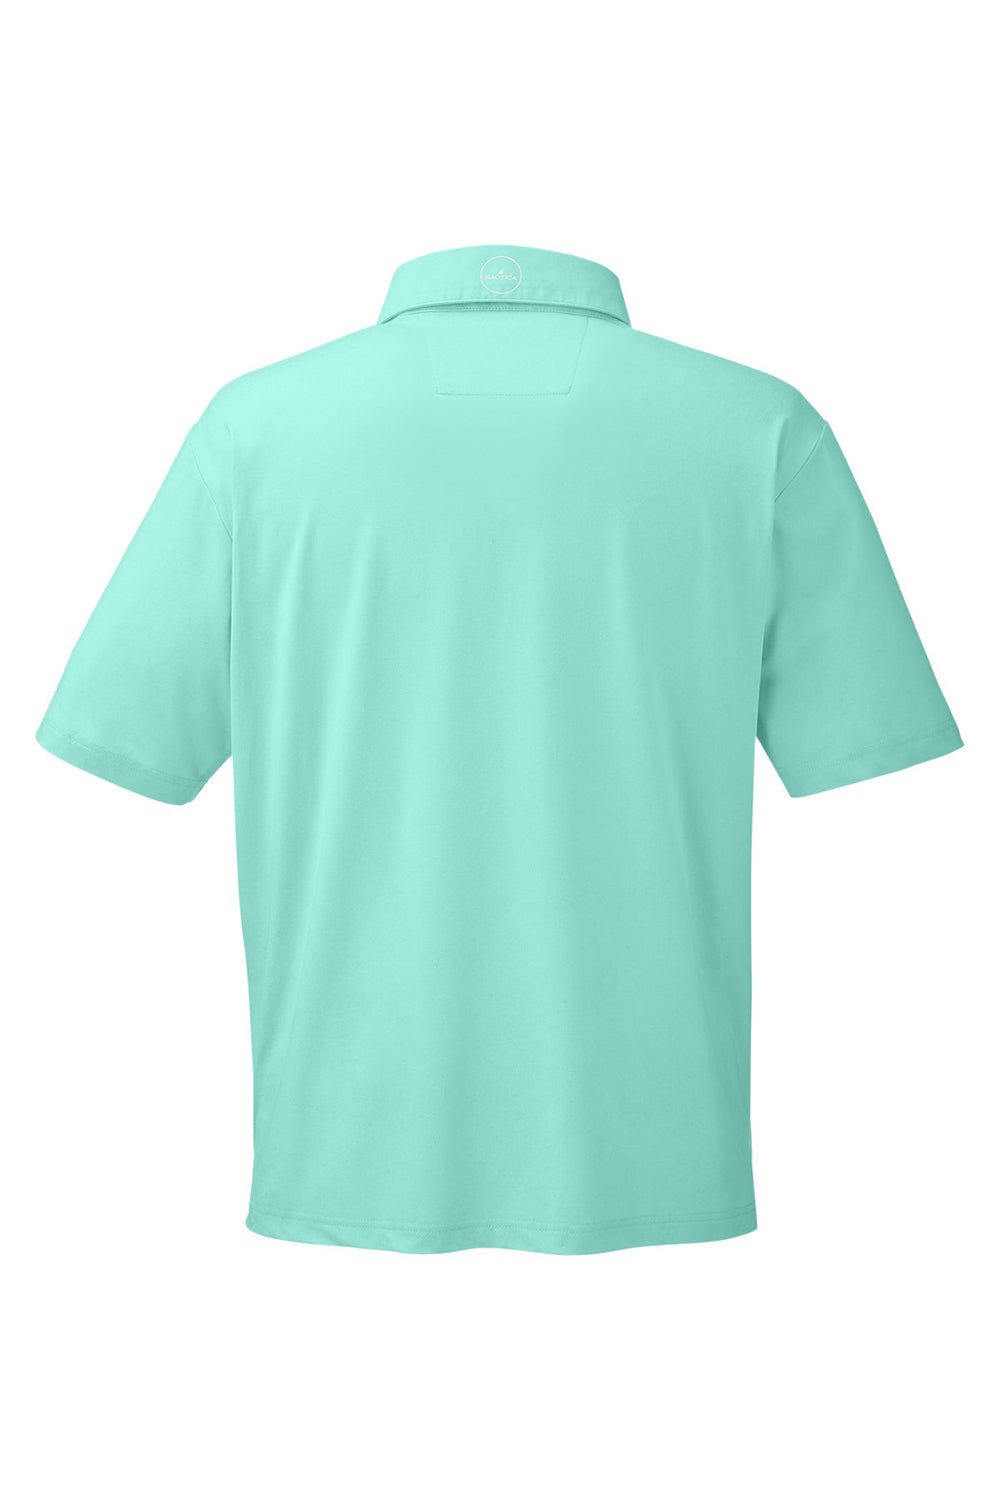 Nautica N17922 Mens Saltwater Short Sleeve Polo Shirt Cool Mint Green Flat Back